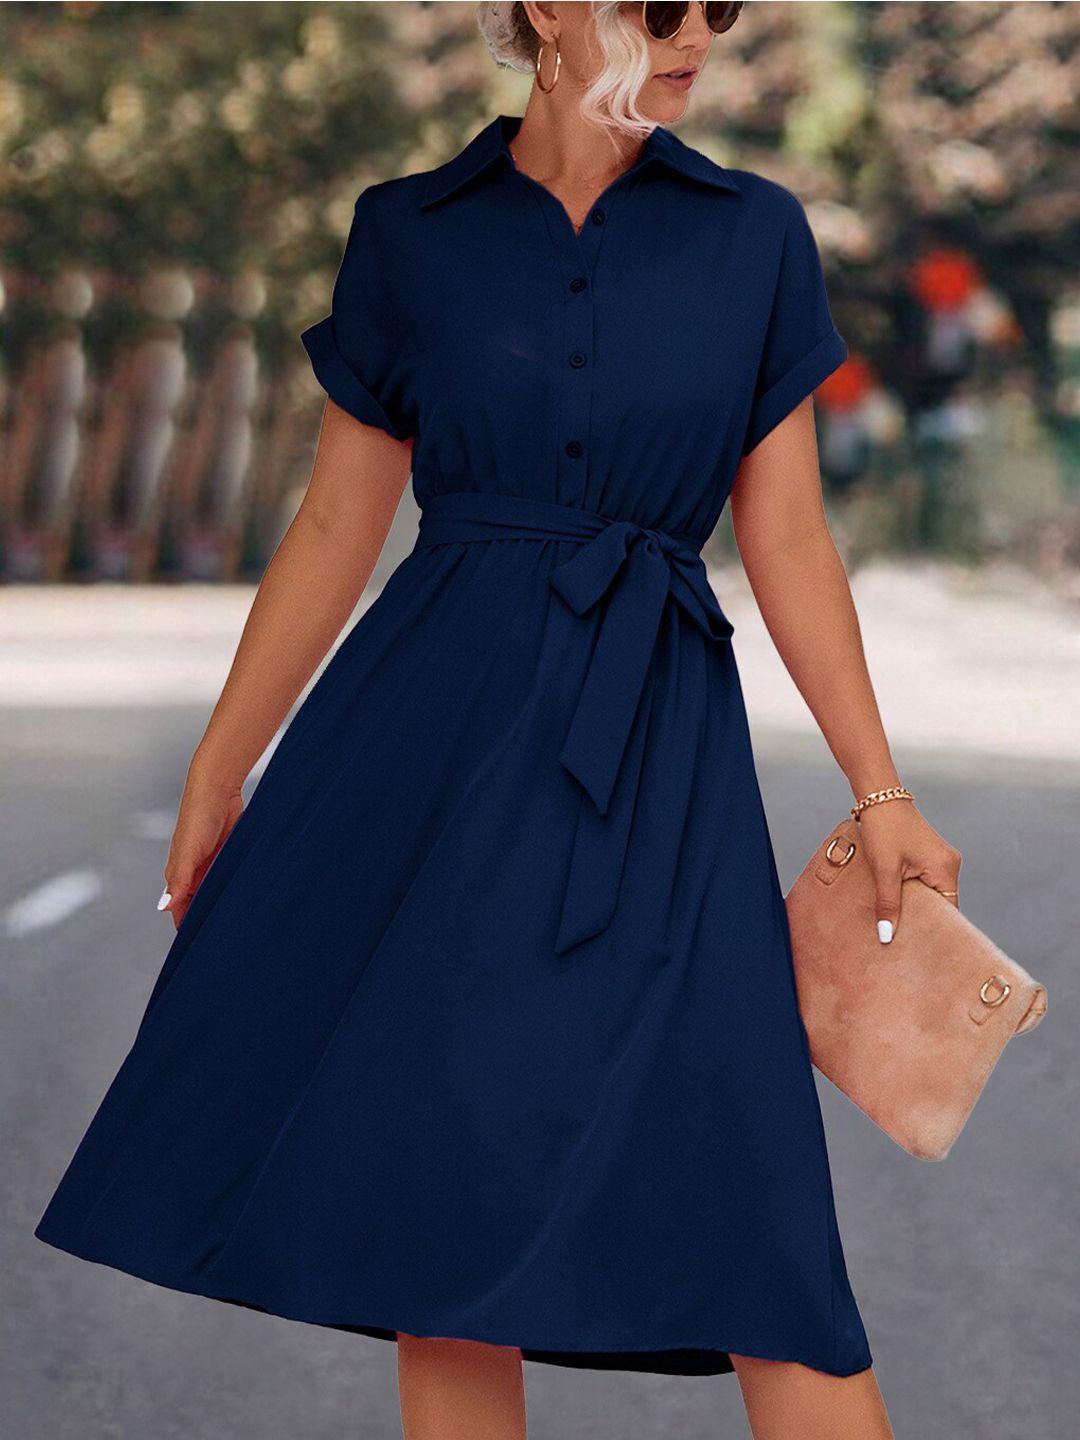 bostreet navy blue extended sleeve shirt dress with belt